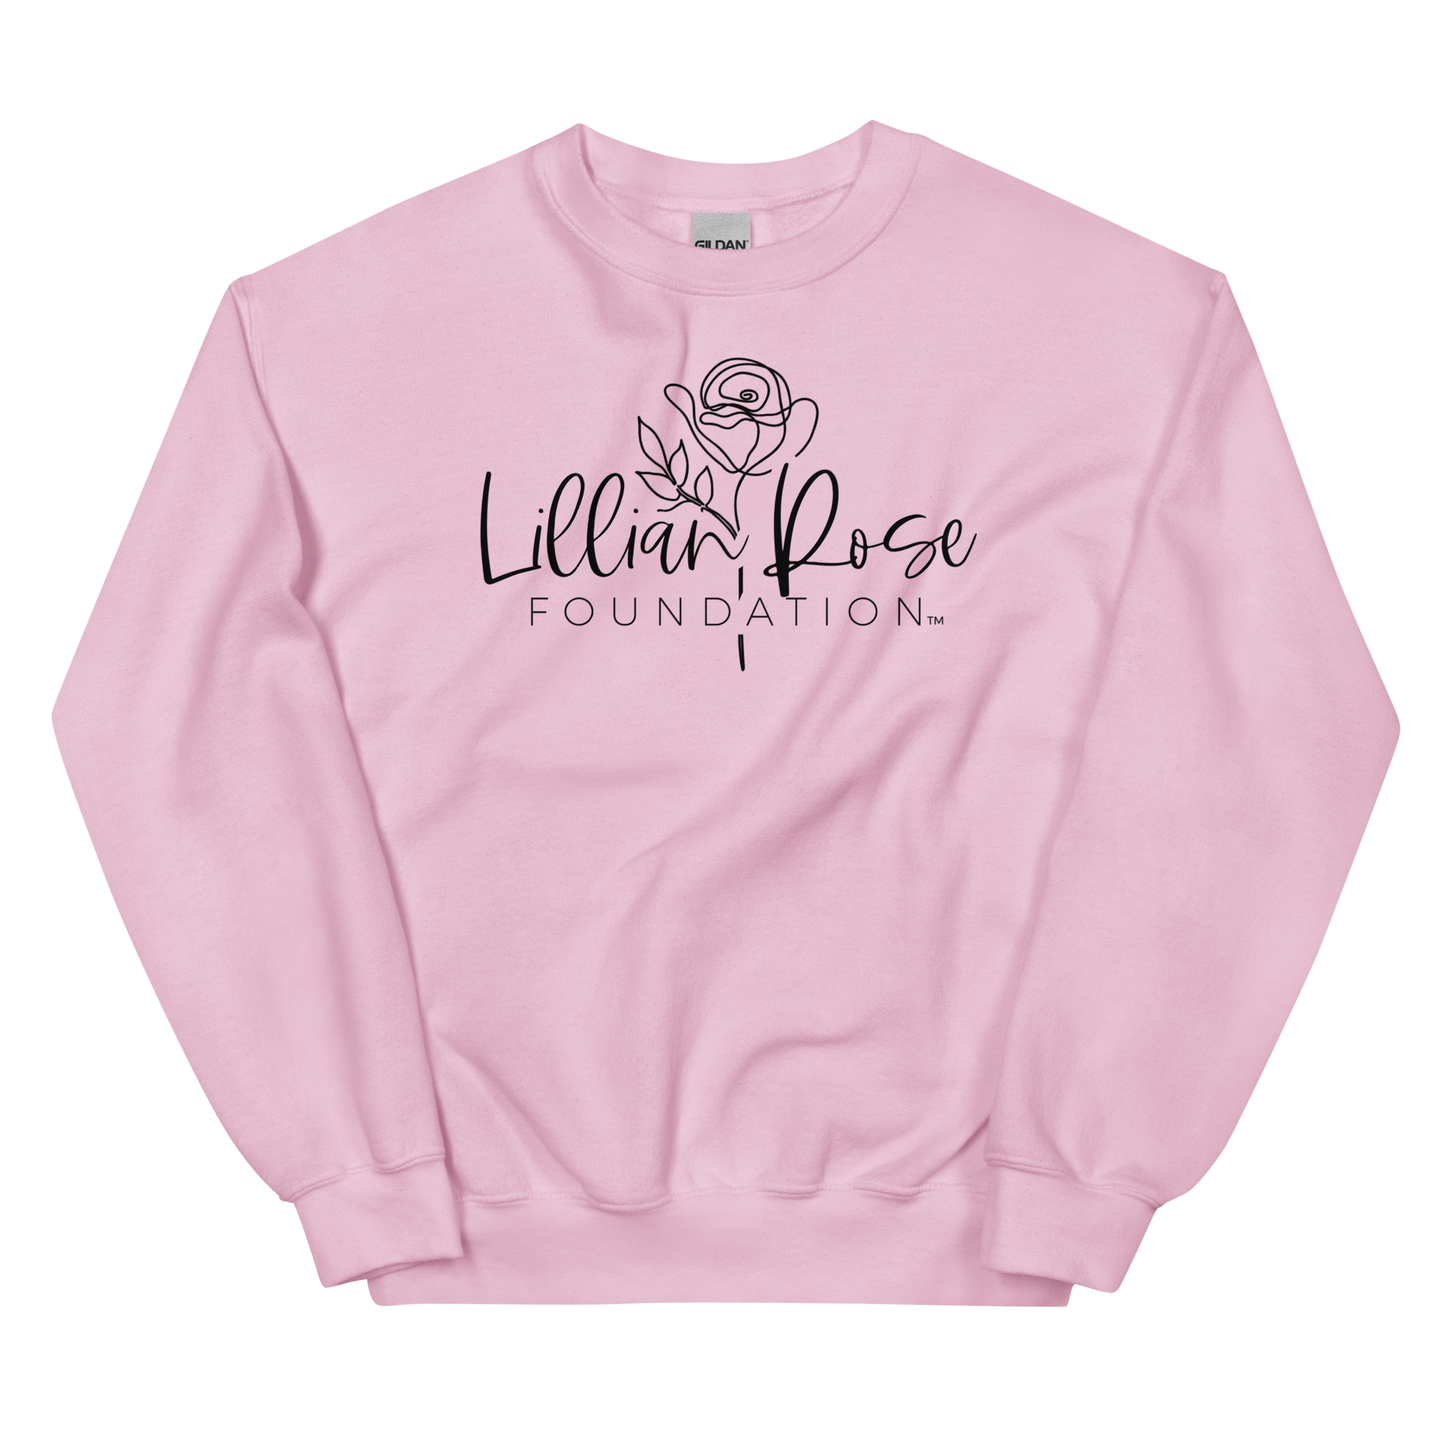 Lillian Rose Foundation™ Sweatshirt